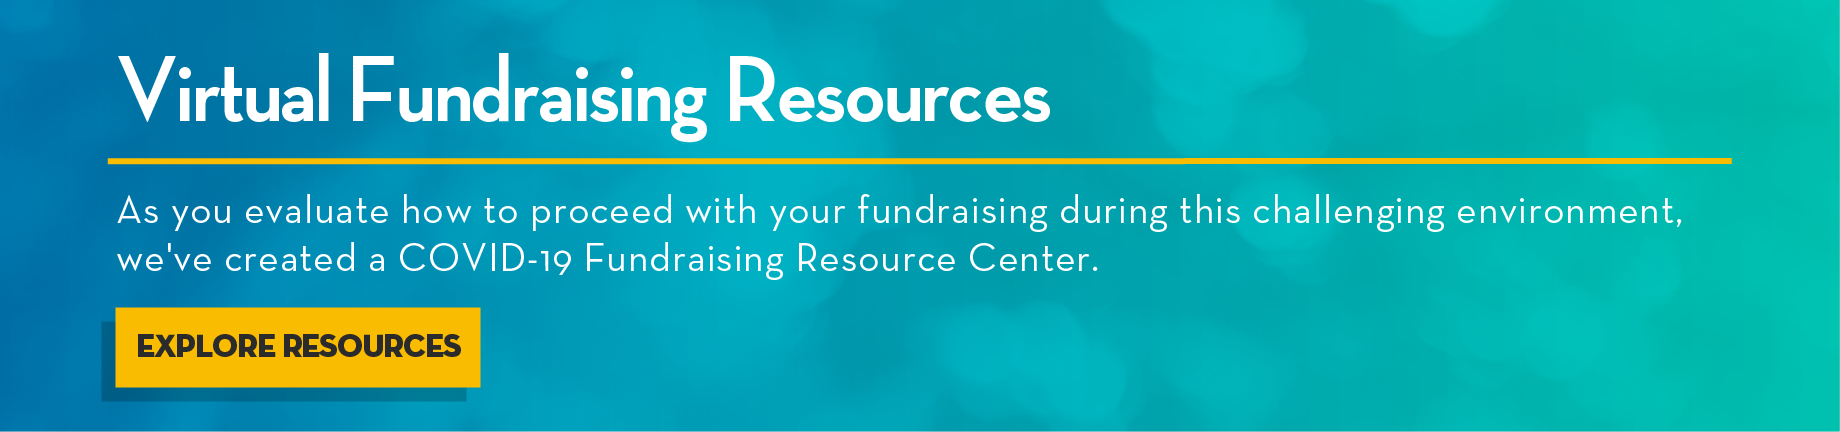 Virtual_Fundraising_Resources_CTA_2x